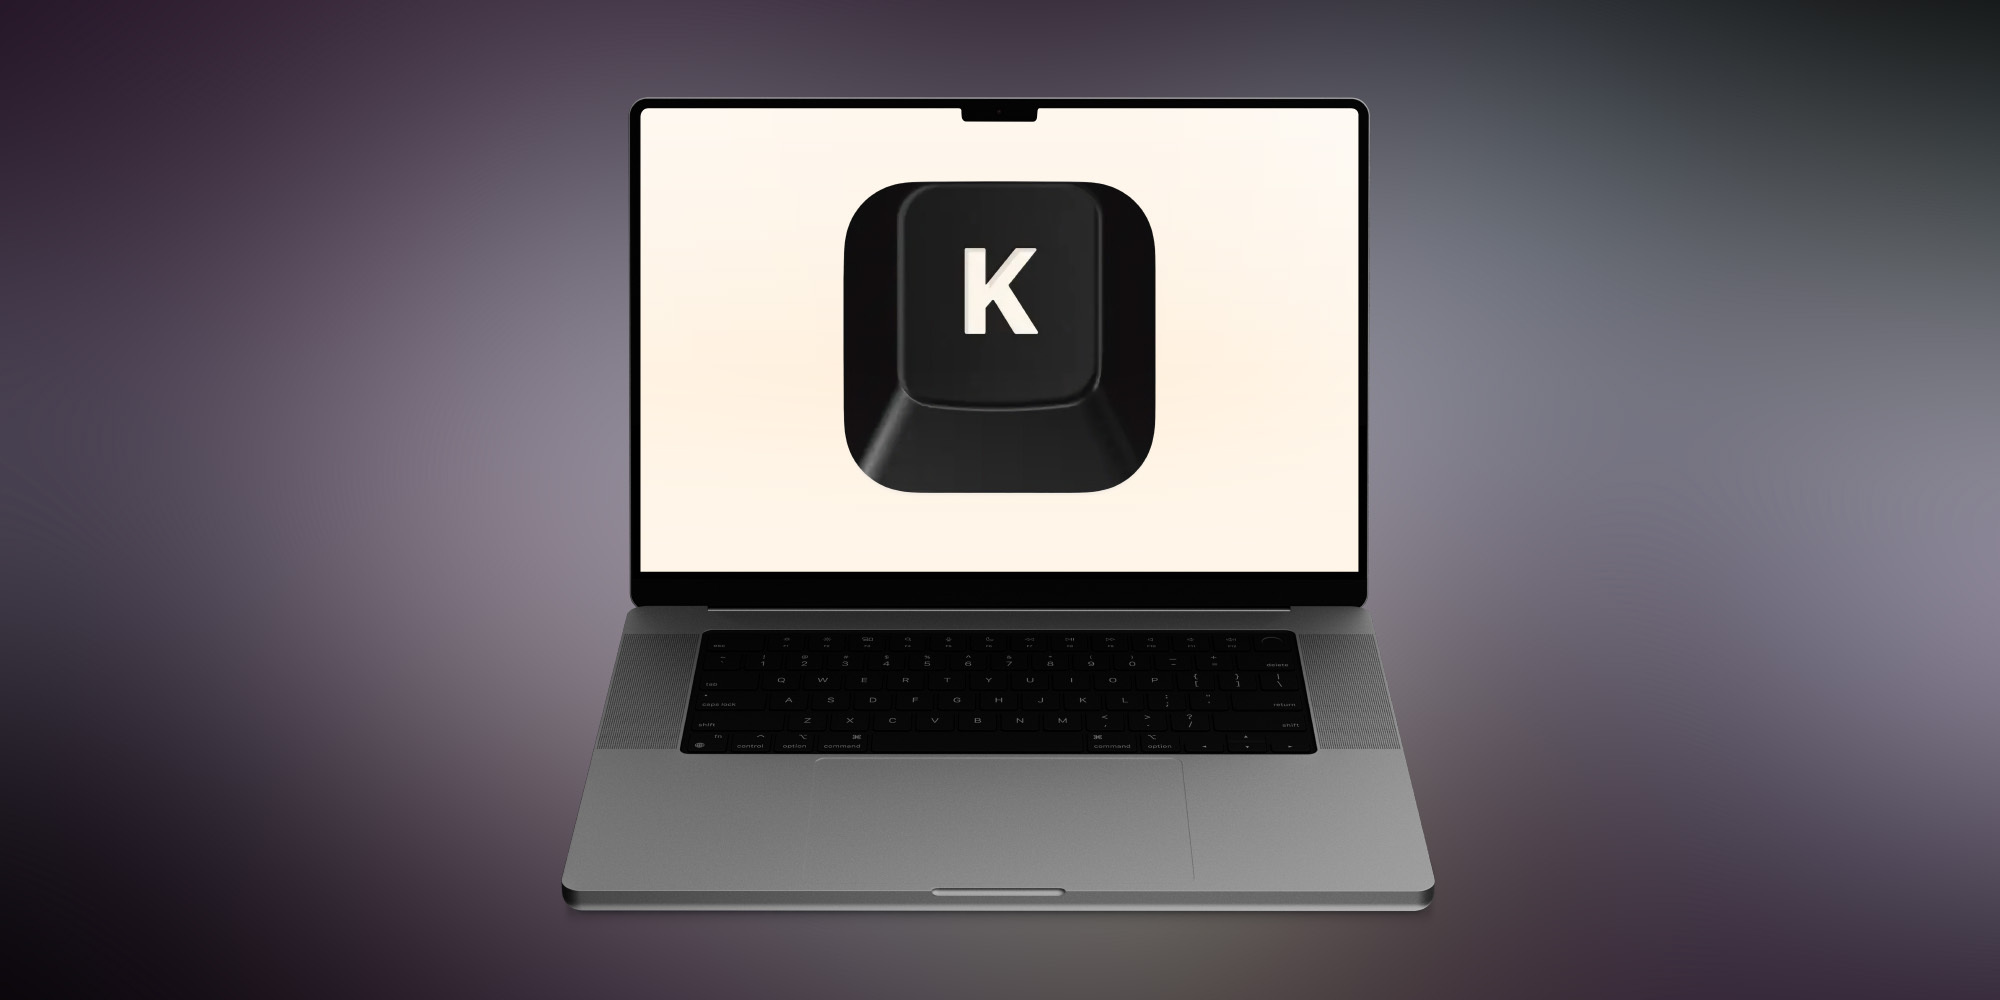 MacBook Keyboard Tester: A Handy Tool for Apple User